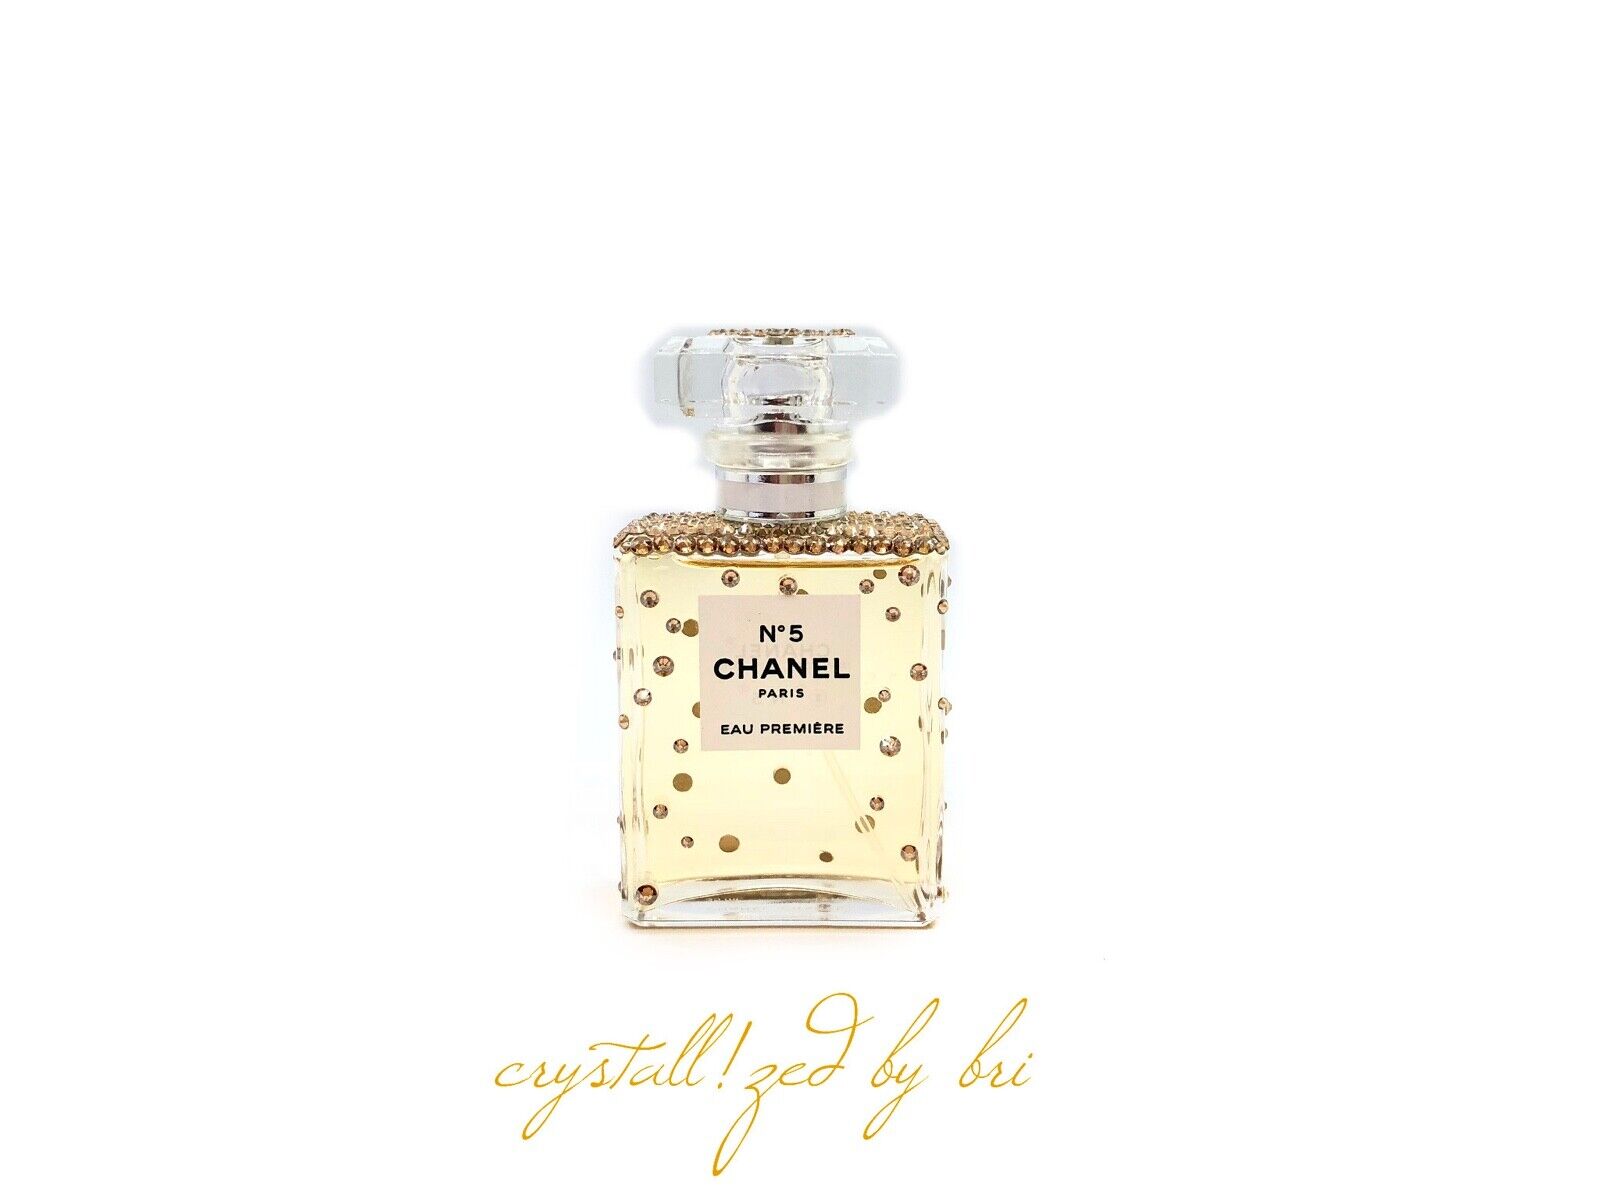 Chanel No1 Parfum Bottle With Rhinestones Accents Embellishment